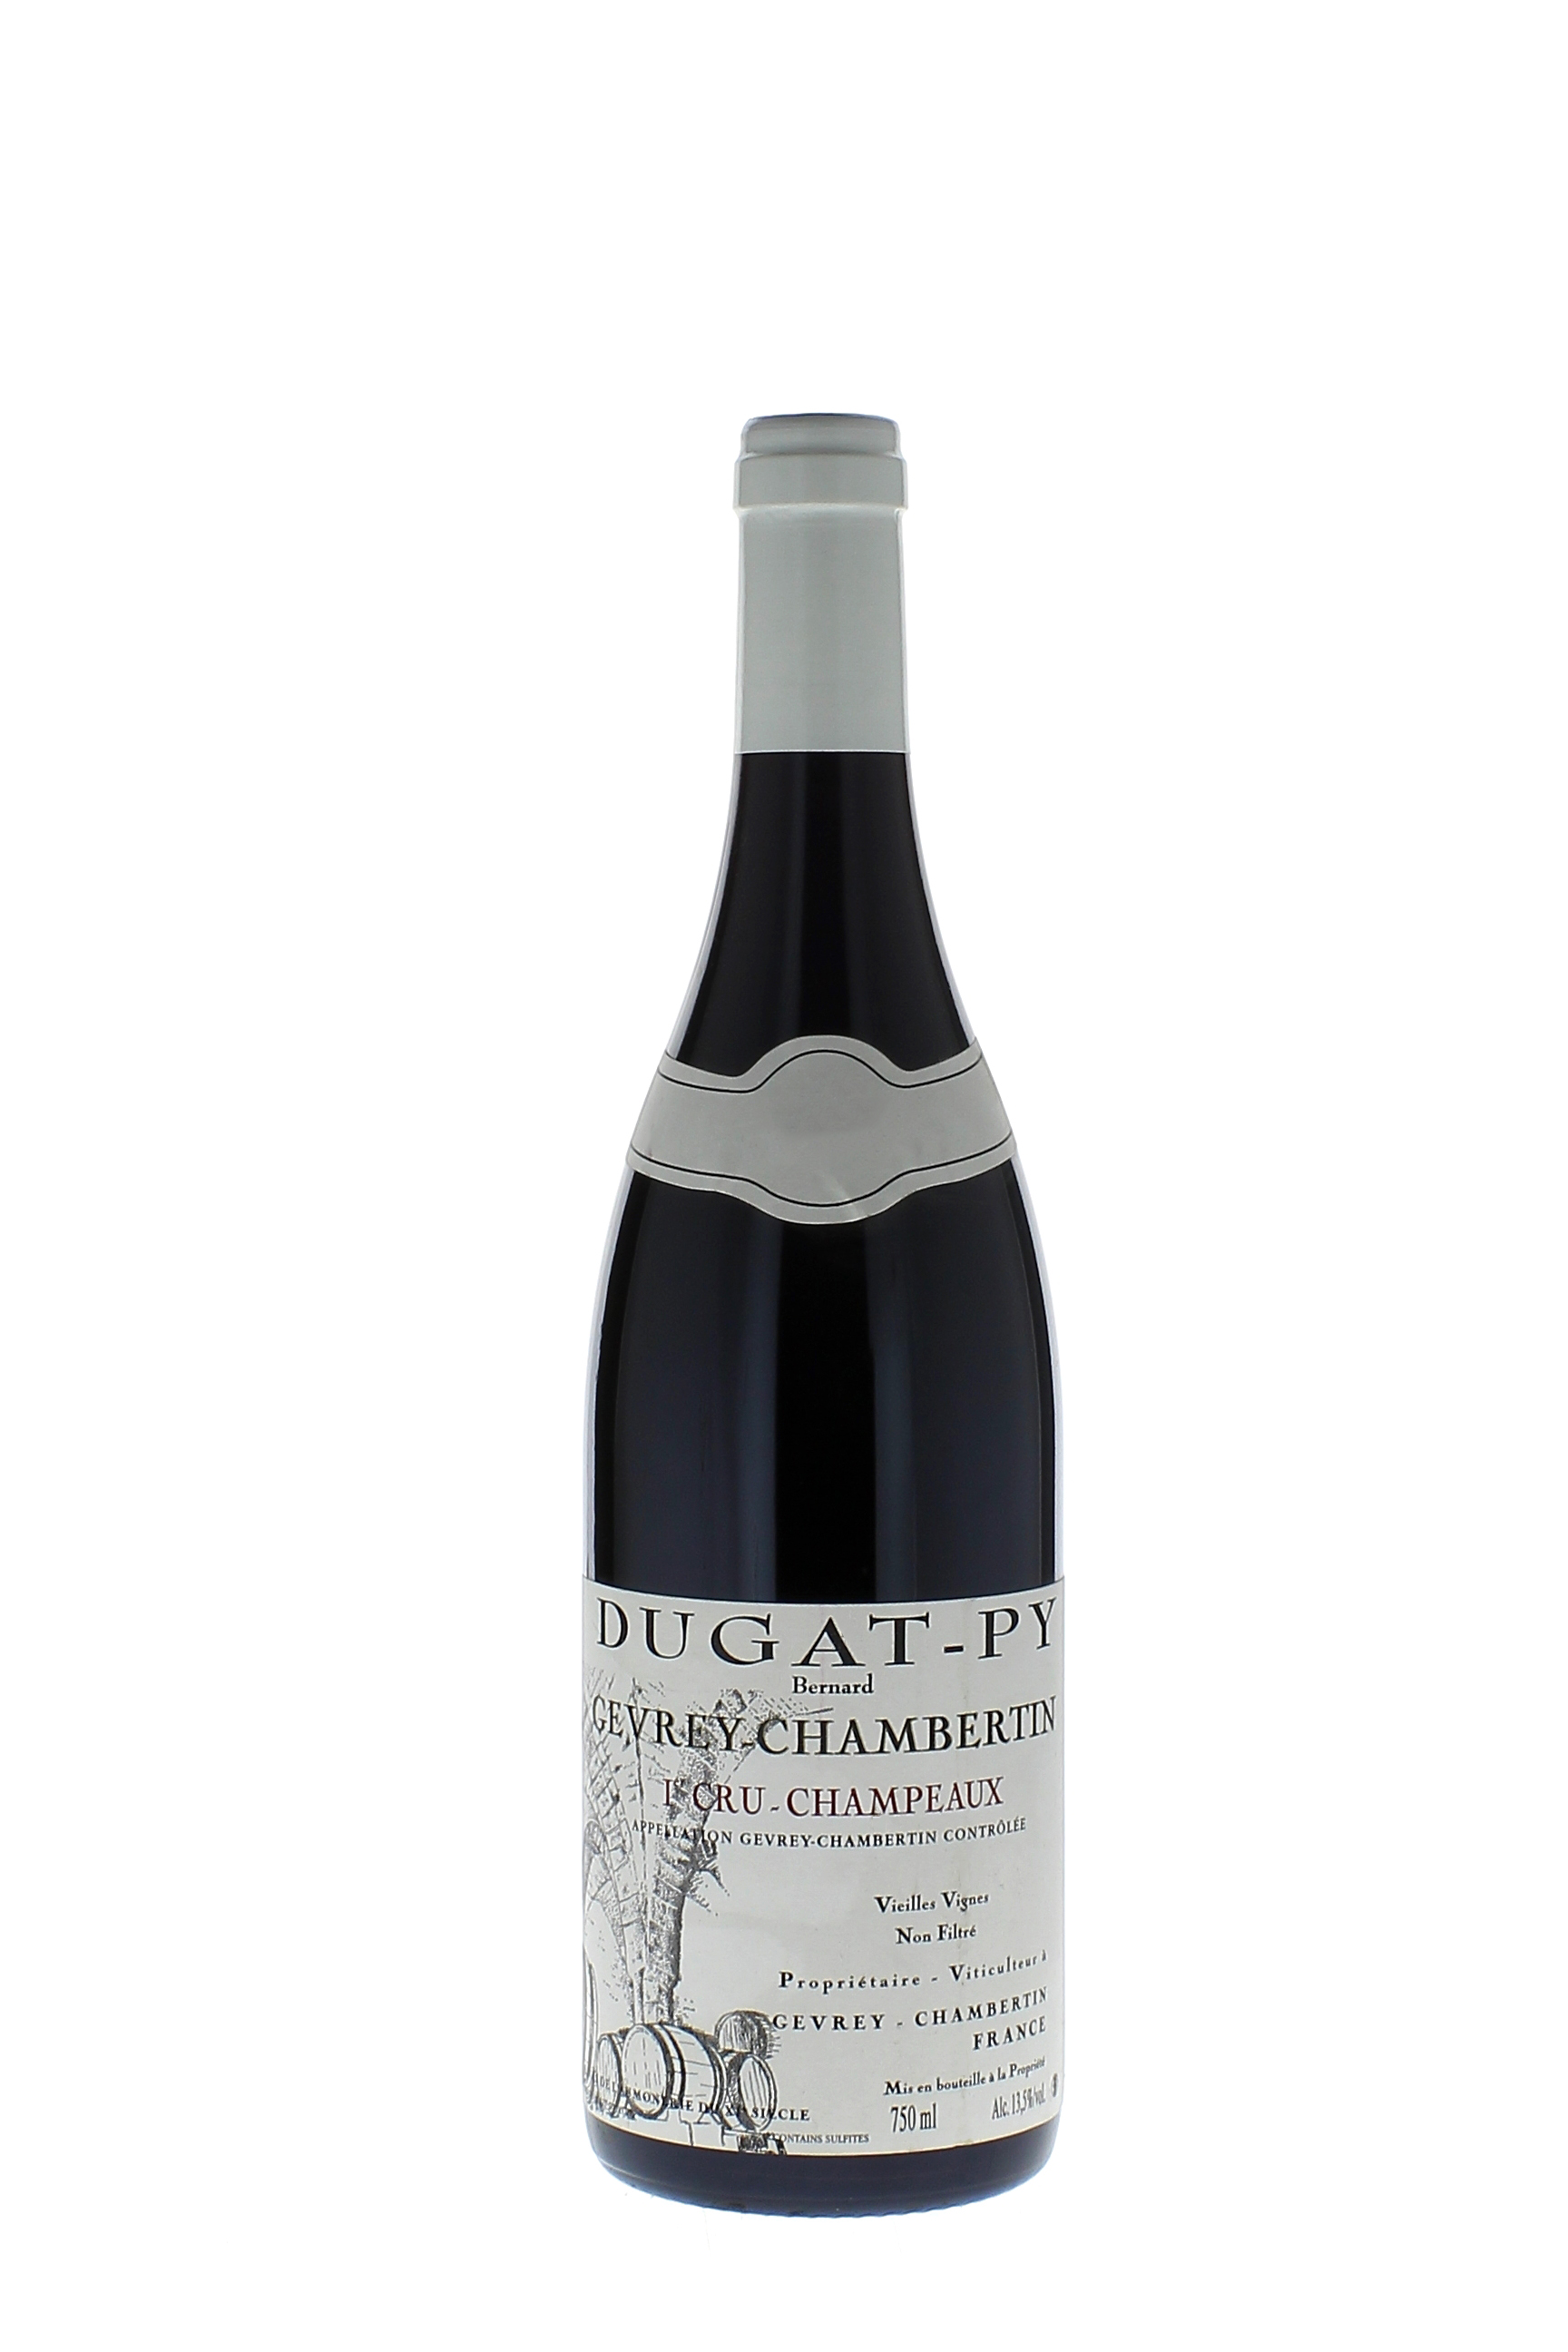 Gevrey chambertin champeaux 2014 Domaine DUGAT-PY, Bourgogne rouge